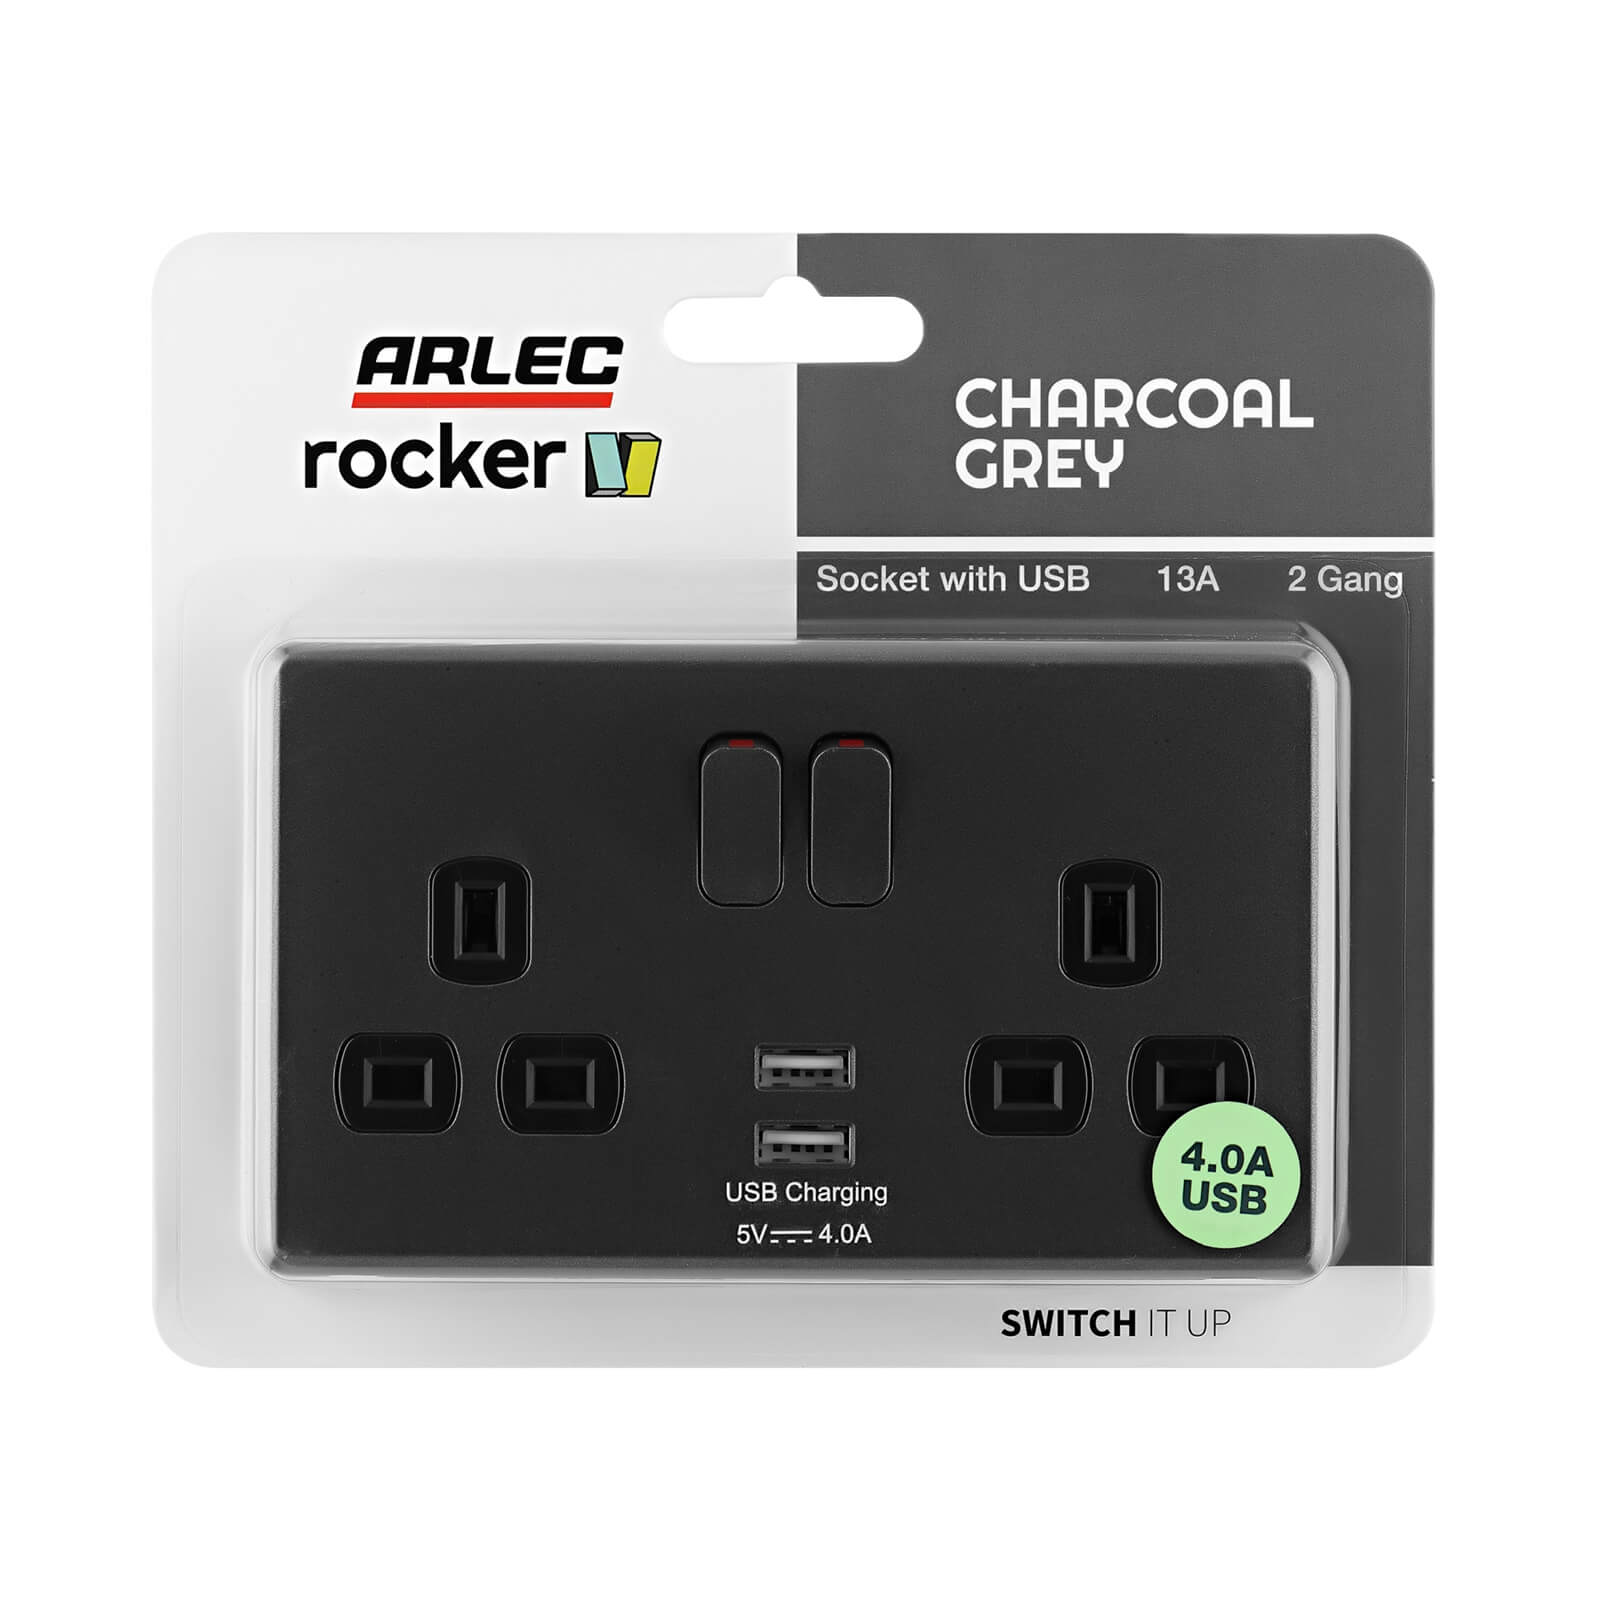 Arlec Rocker Charcoal Grey Double USB Socket 2 x 4A USB